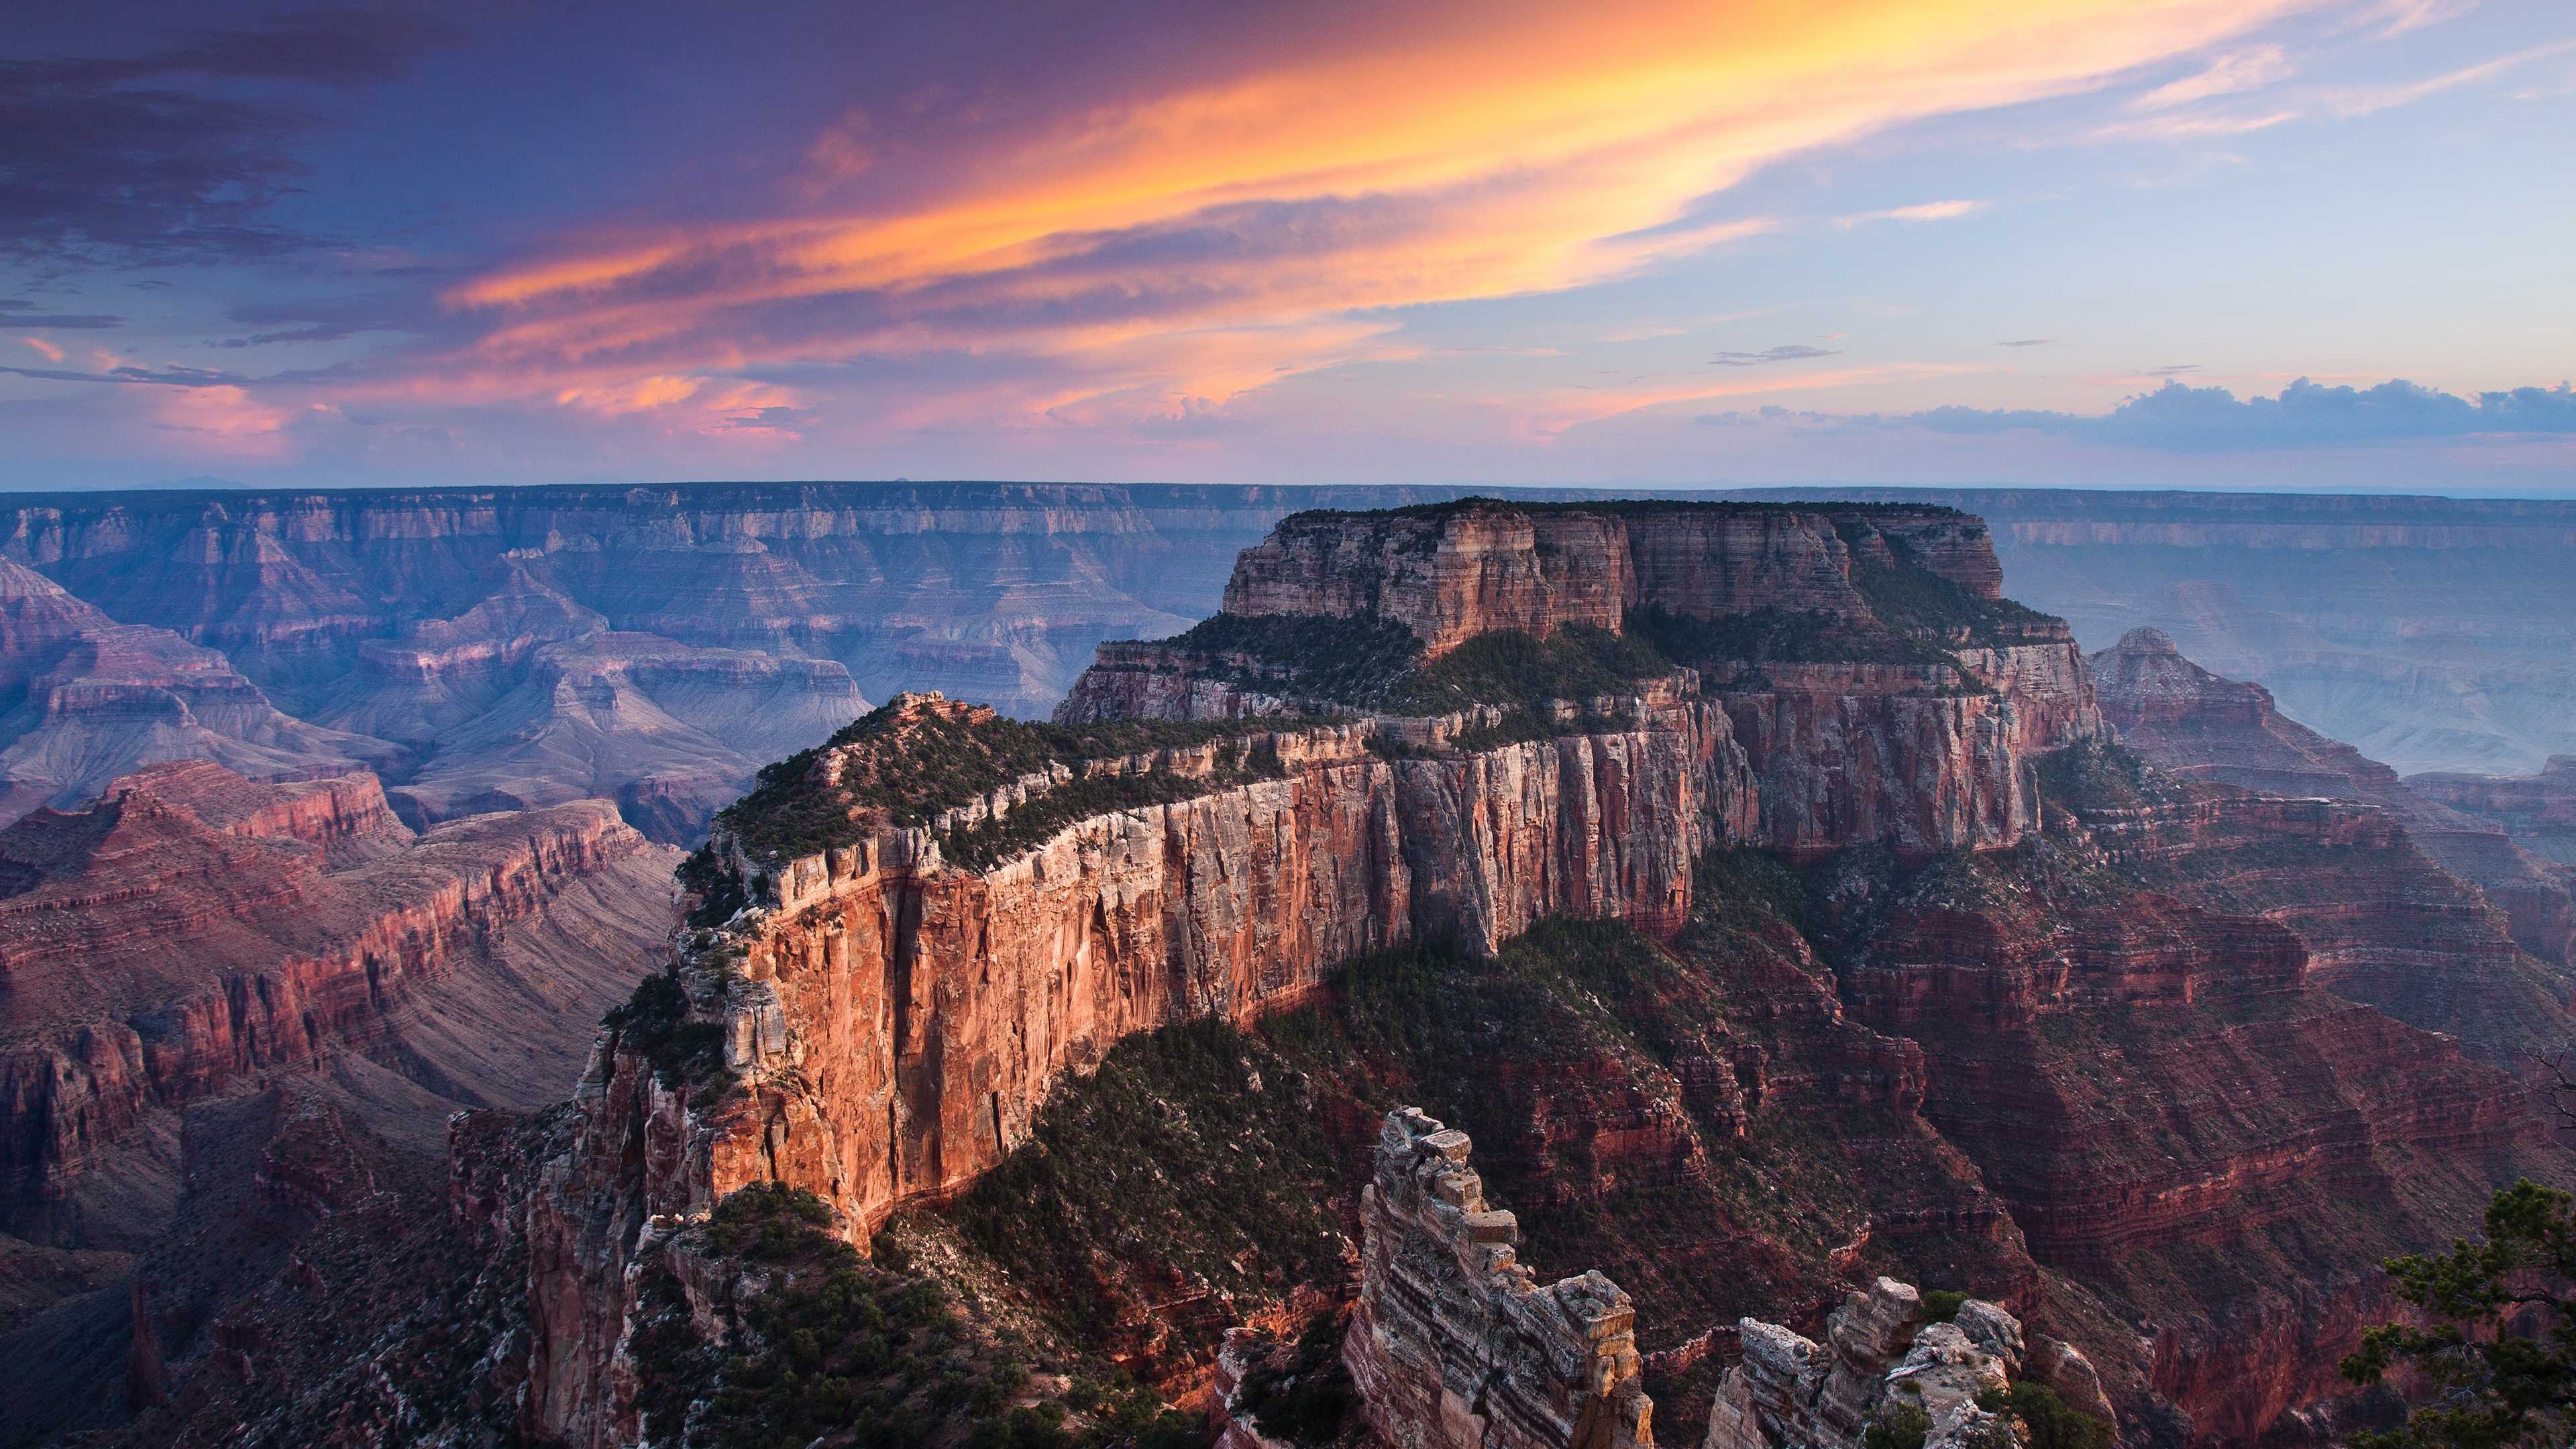 Wallpapers the Grand Canyon National Park unites states arizona on the desktop